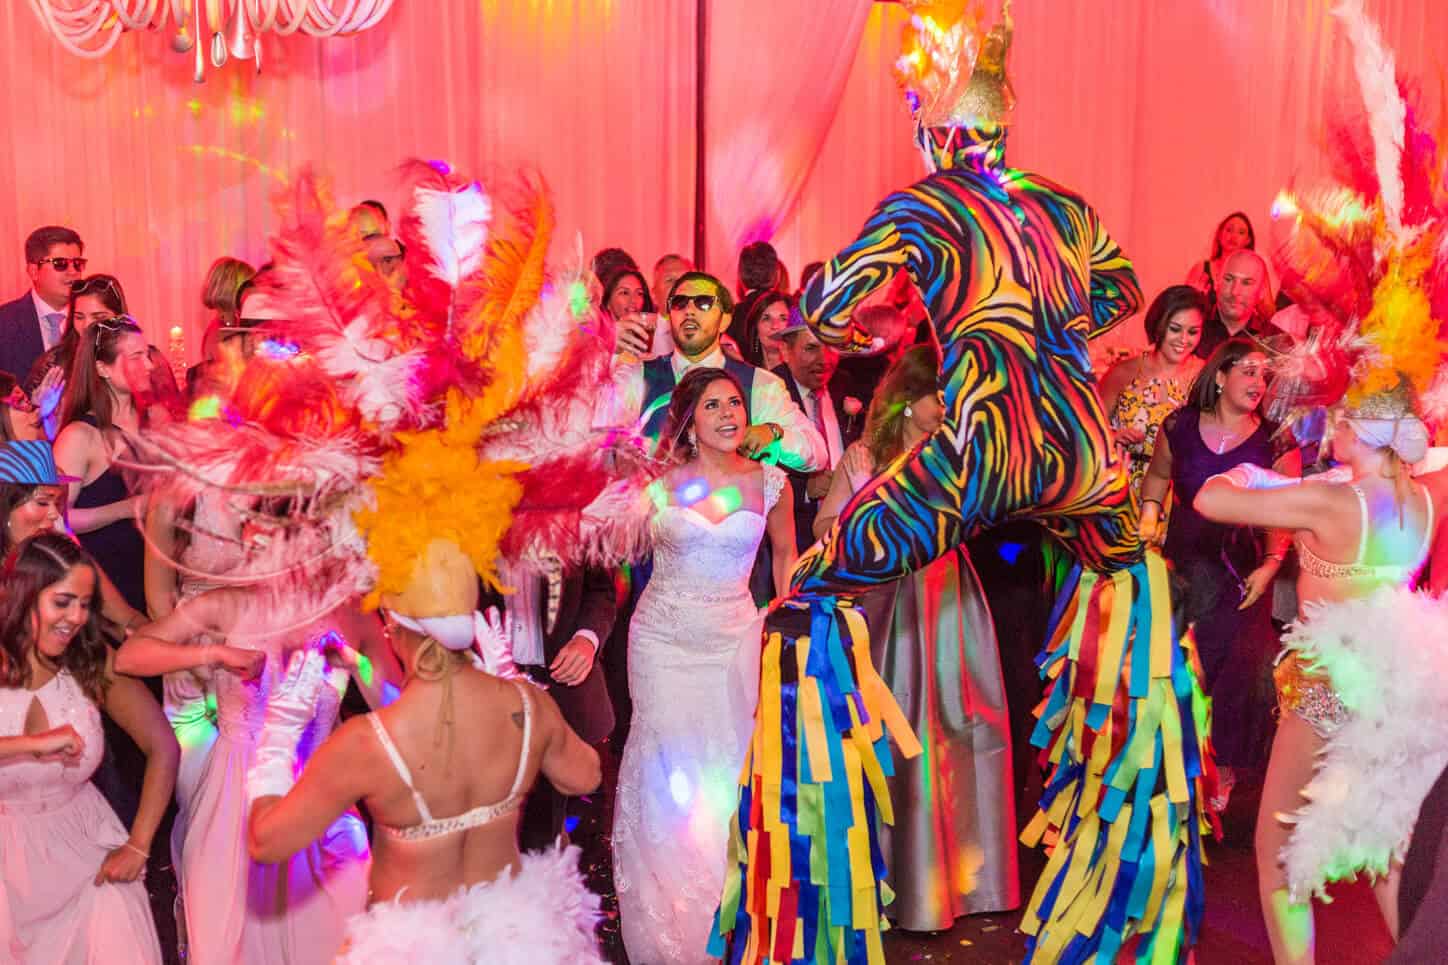 Photo of Hora Loca wedding vendor entertainment | By White House Wedding Photography